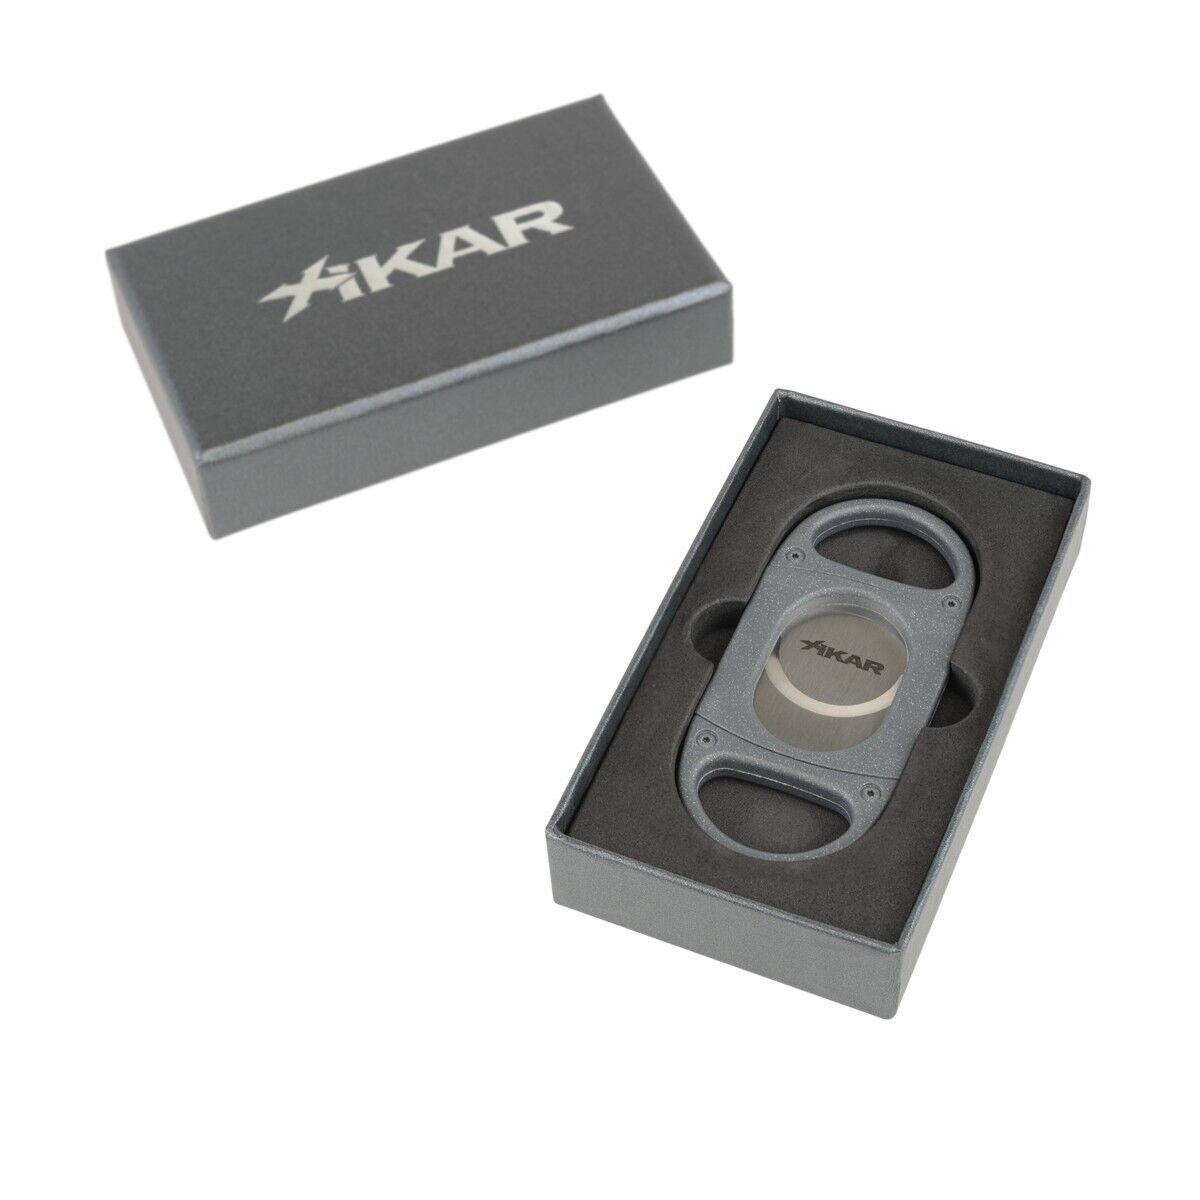 Xikar X8 Cigar Cutter Stainless Steel Blades Cuts 70 Ring Gauge Silver NEW NIB